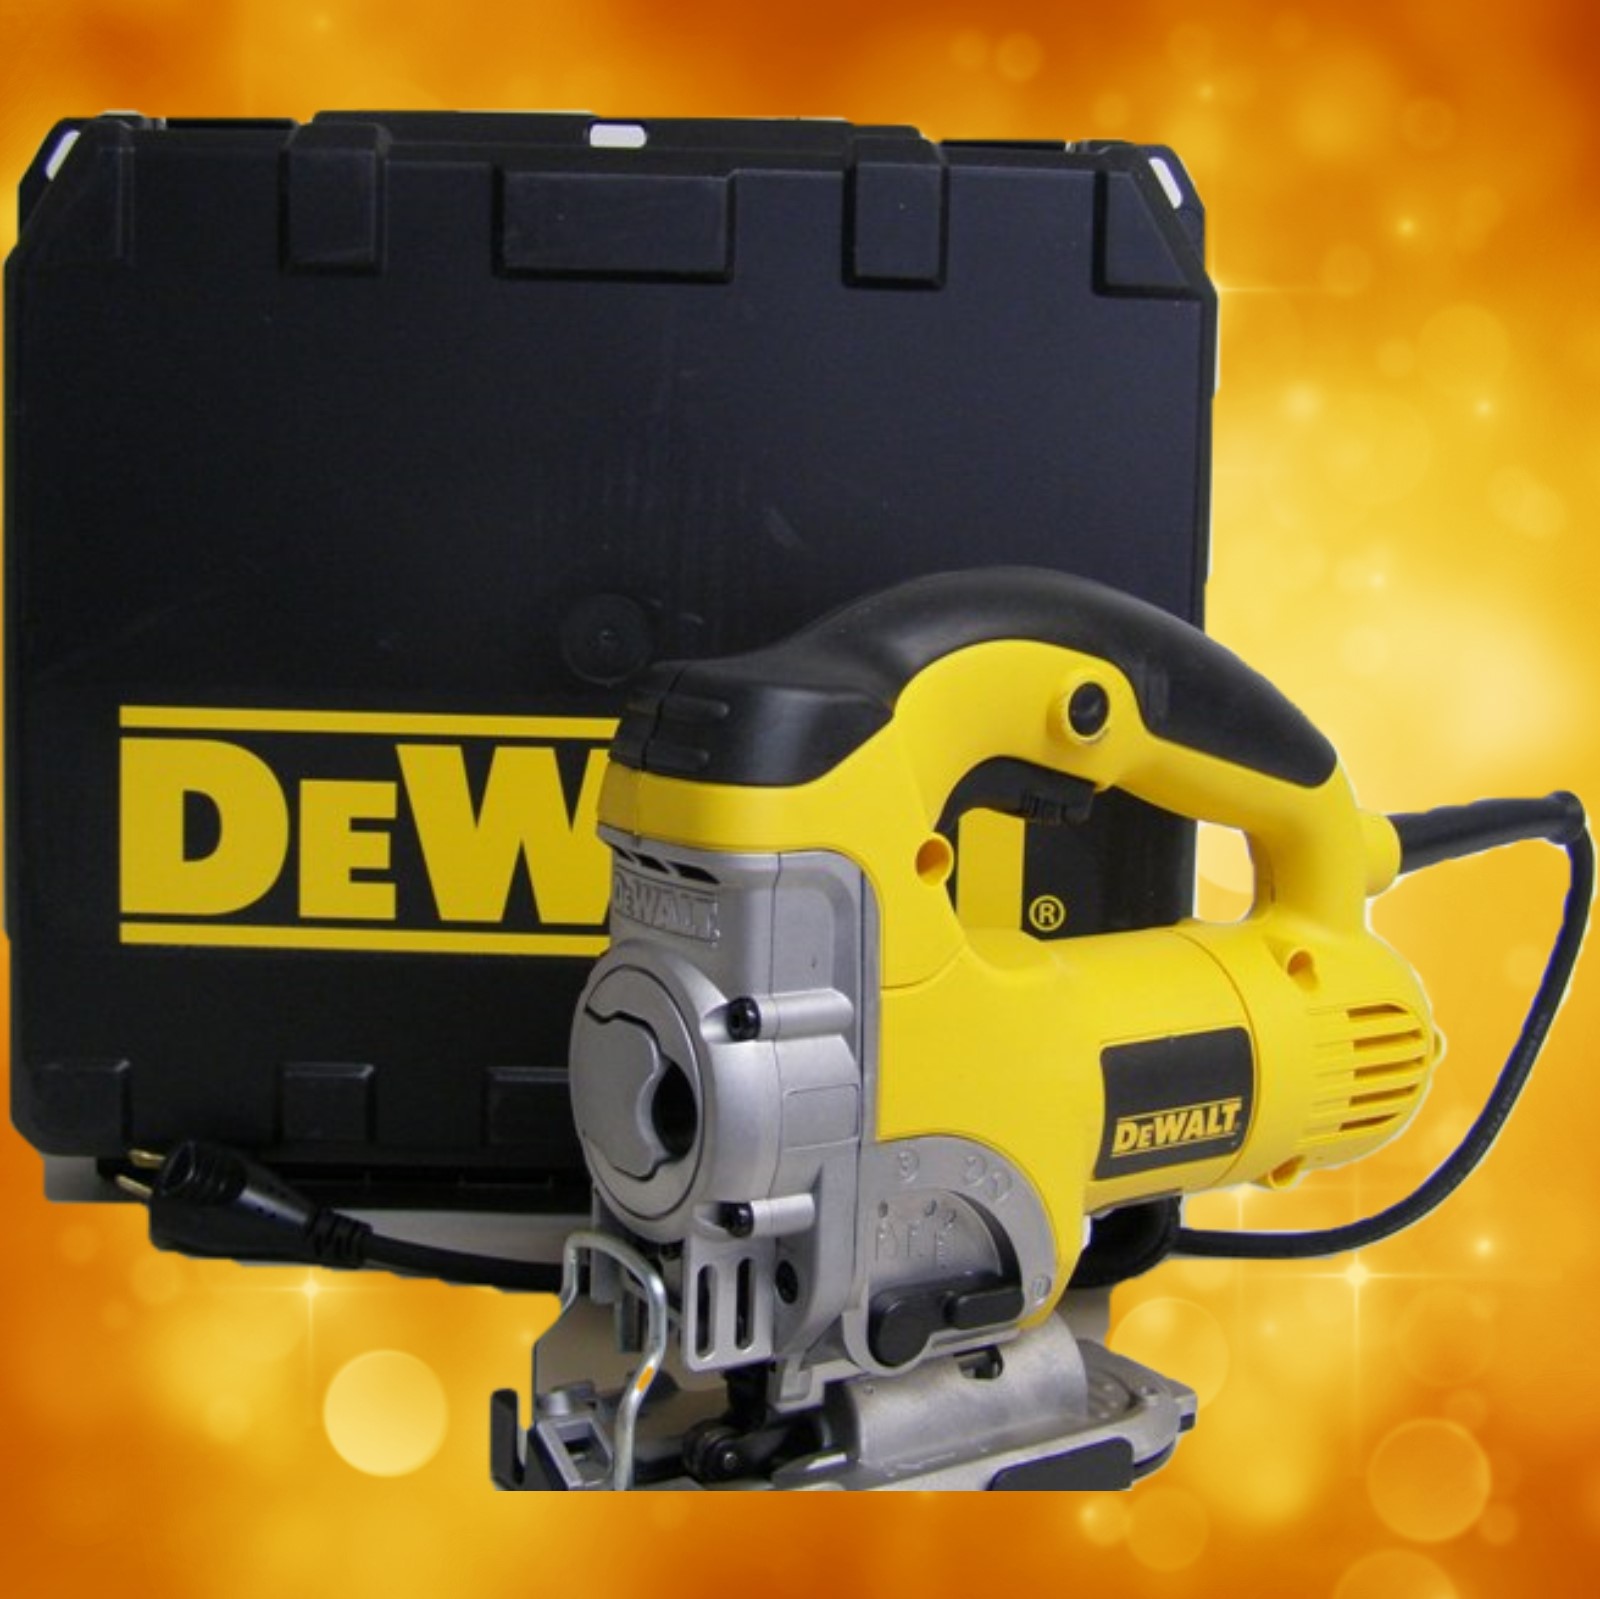 DeWalt DW331K Jig Saw Kit DW331K